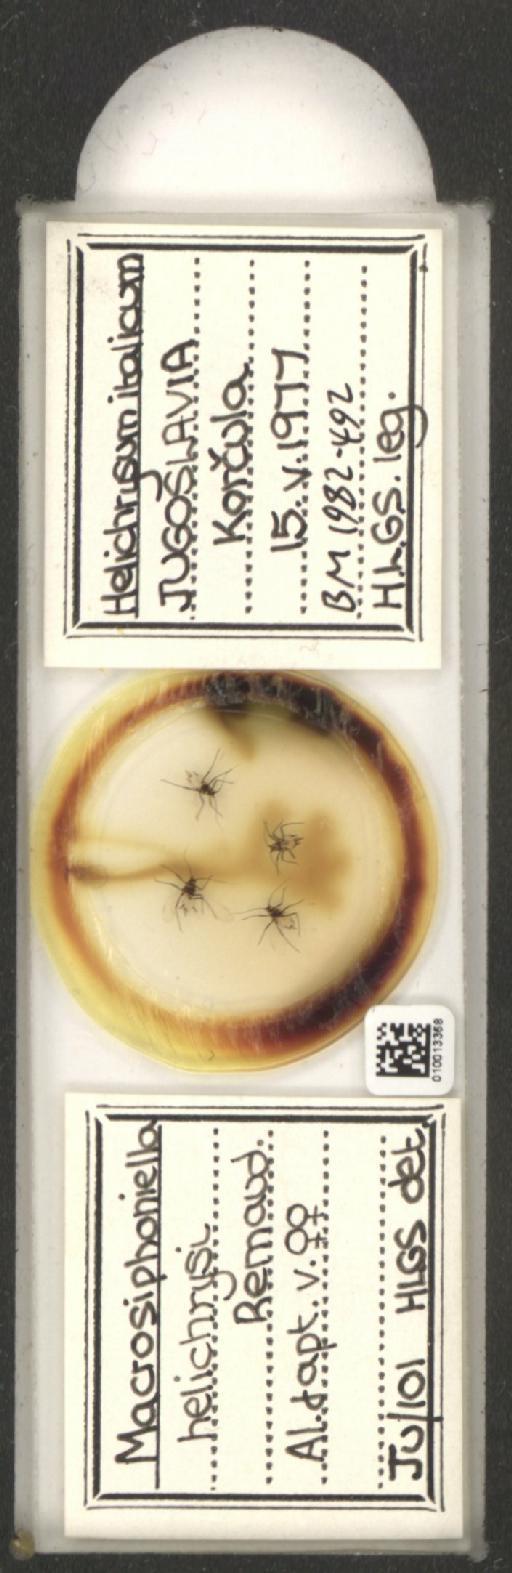 Macrosiphoniella helichrysi Remaudiere, 1952 - 010013368_112660_1094725